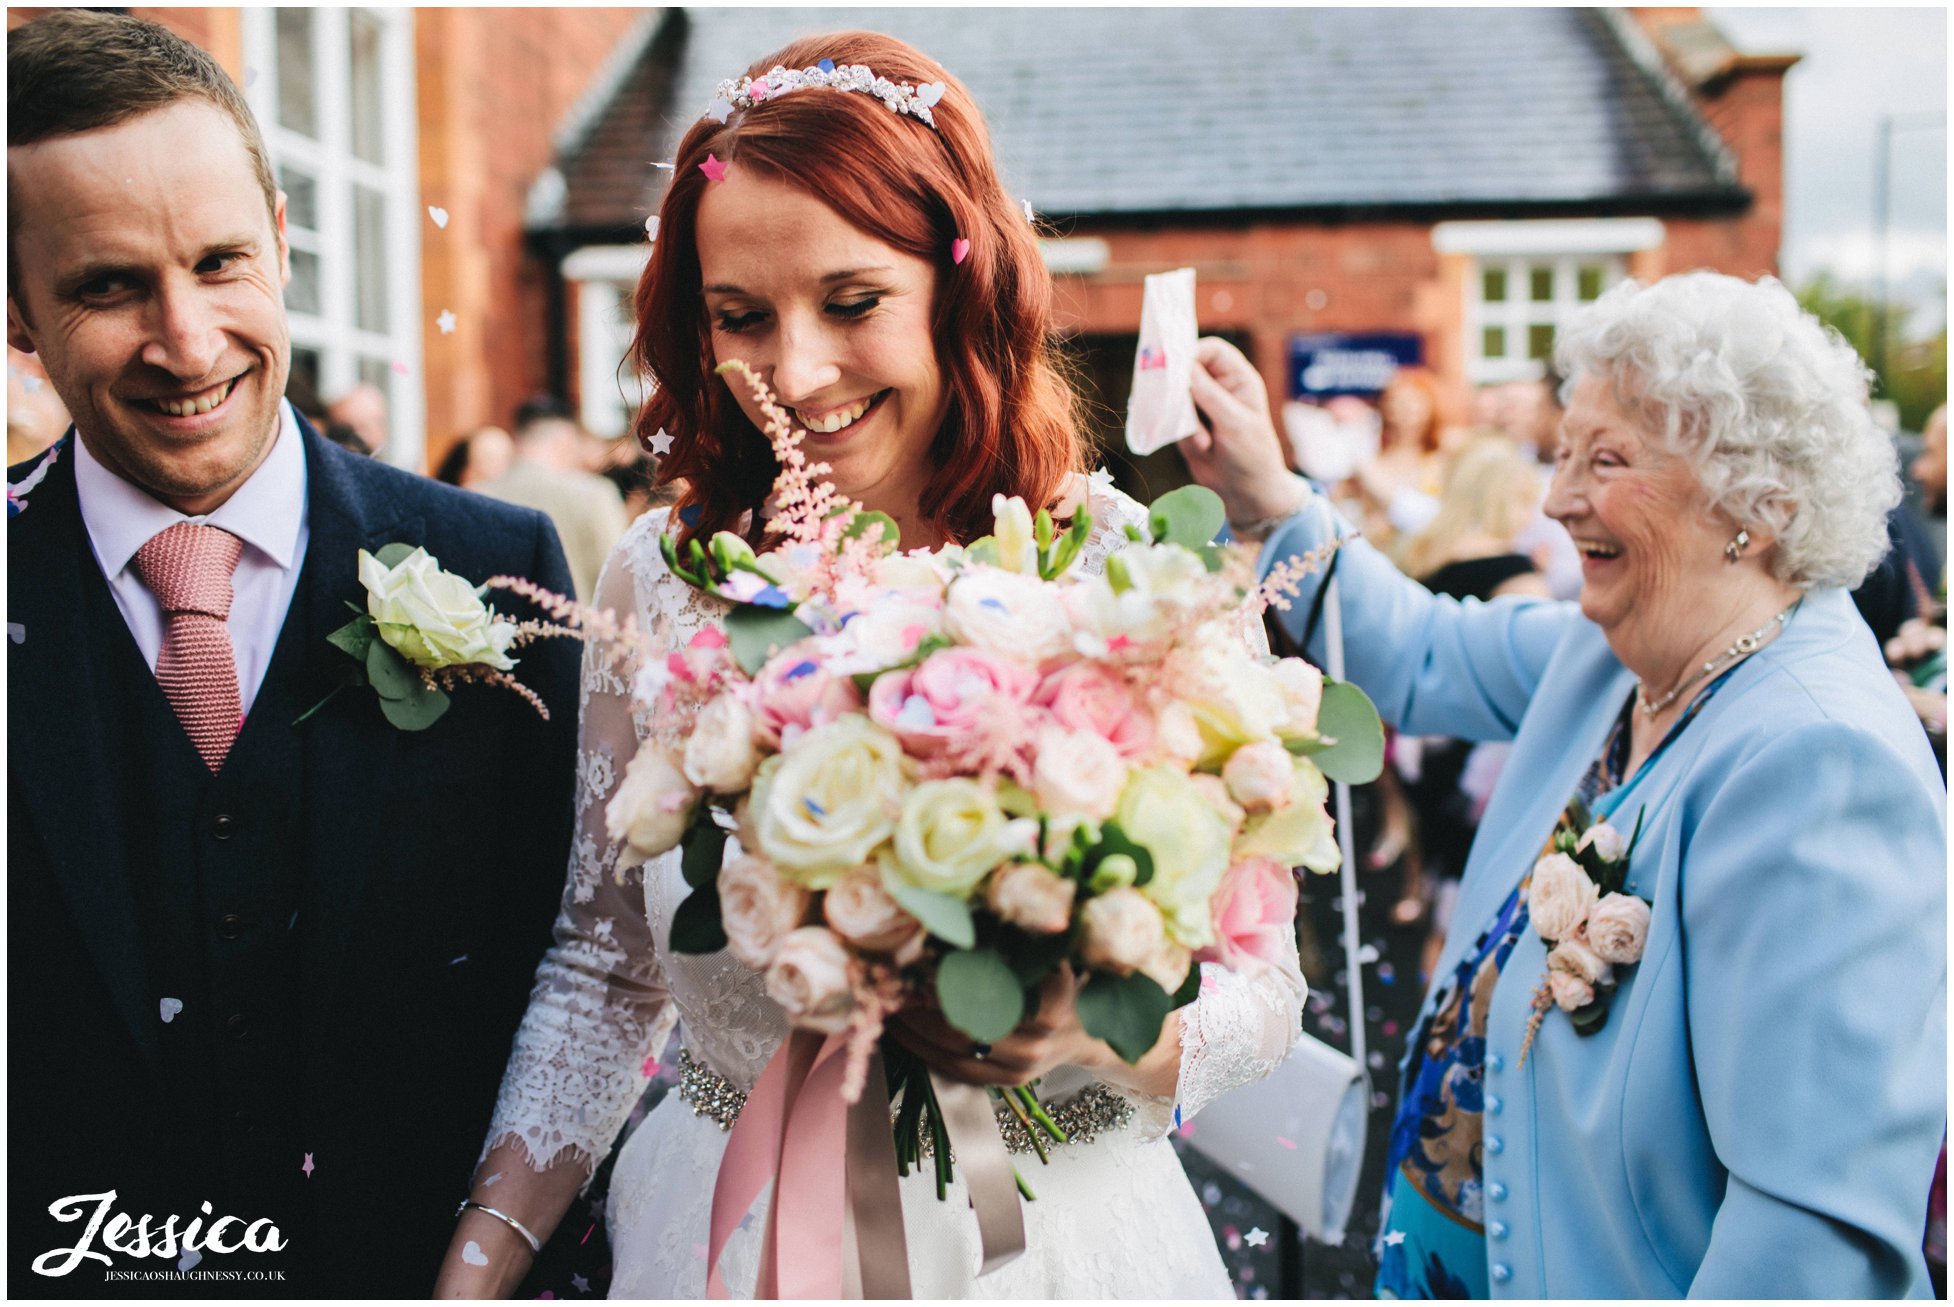 grandma pours confetti over the bride at a manchester wedding